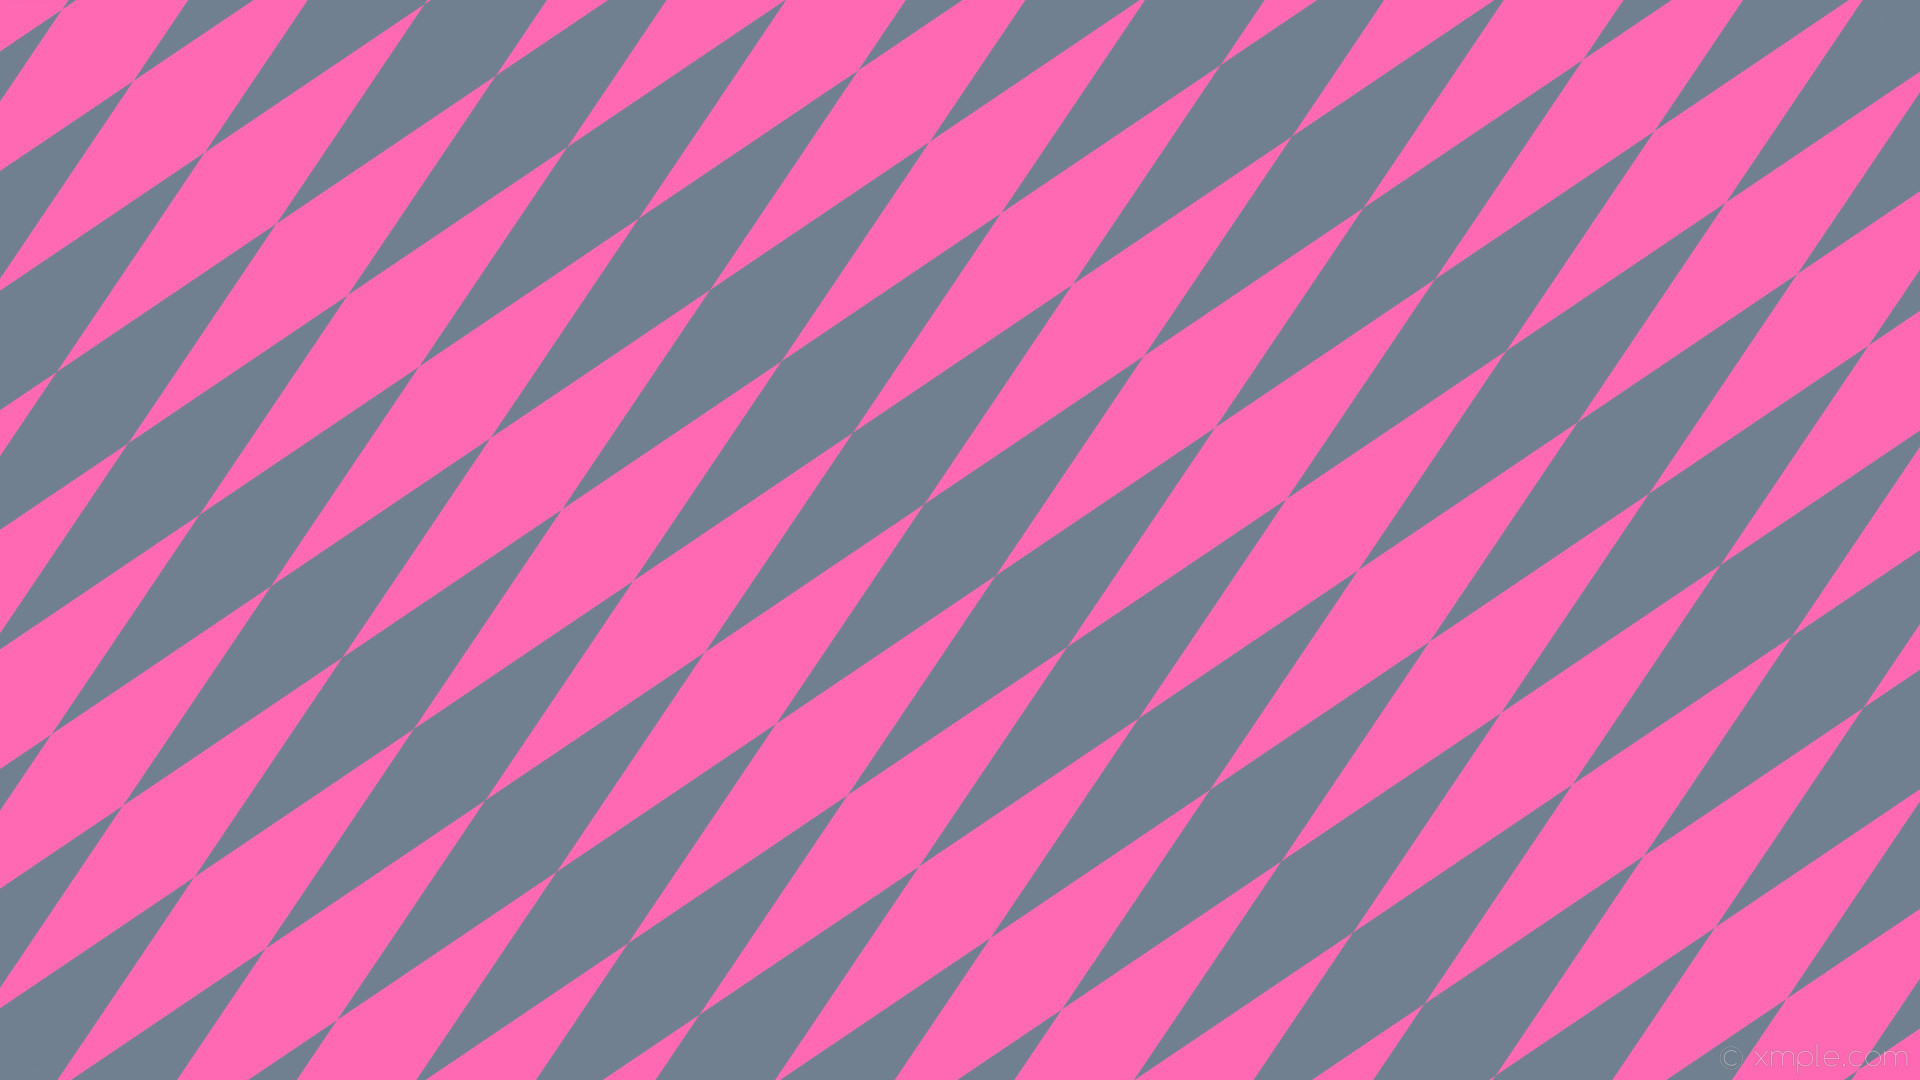 1920x1080 wallpaper rhombus lozenge pink diamond grey slate gray hot pink #708090  #ff69b4 45Â°